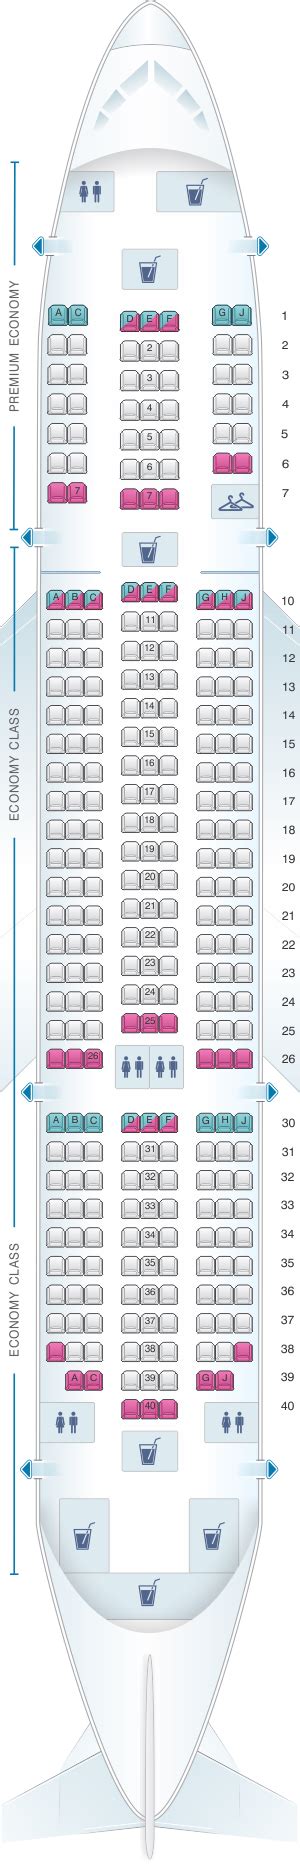 boeing 787-300 seat map